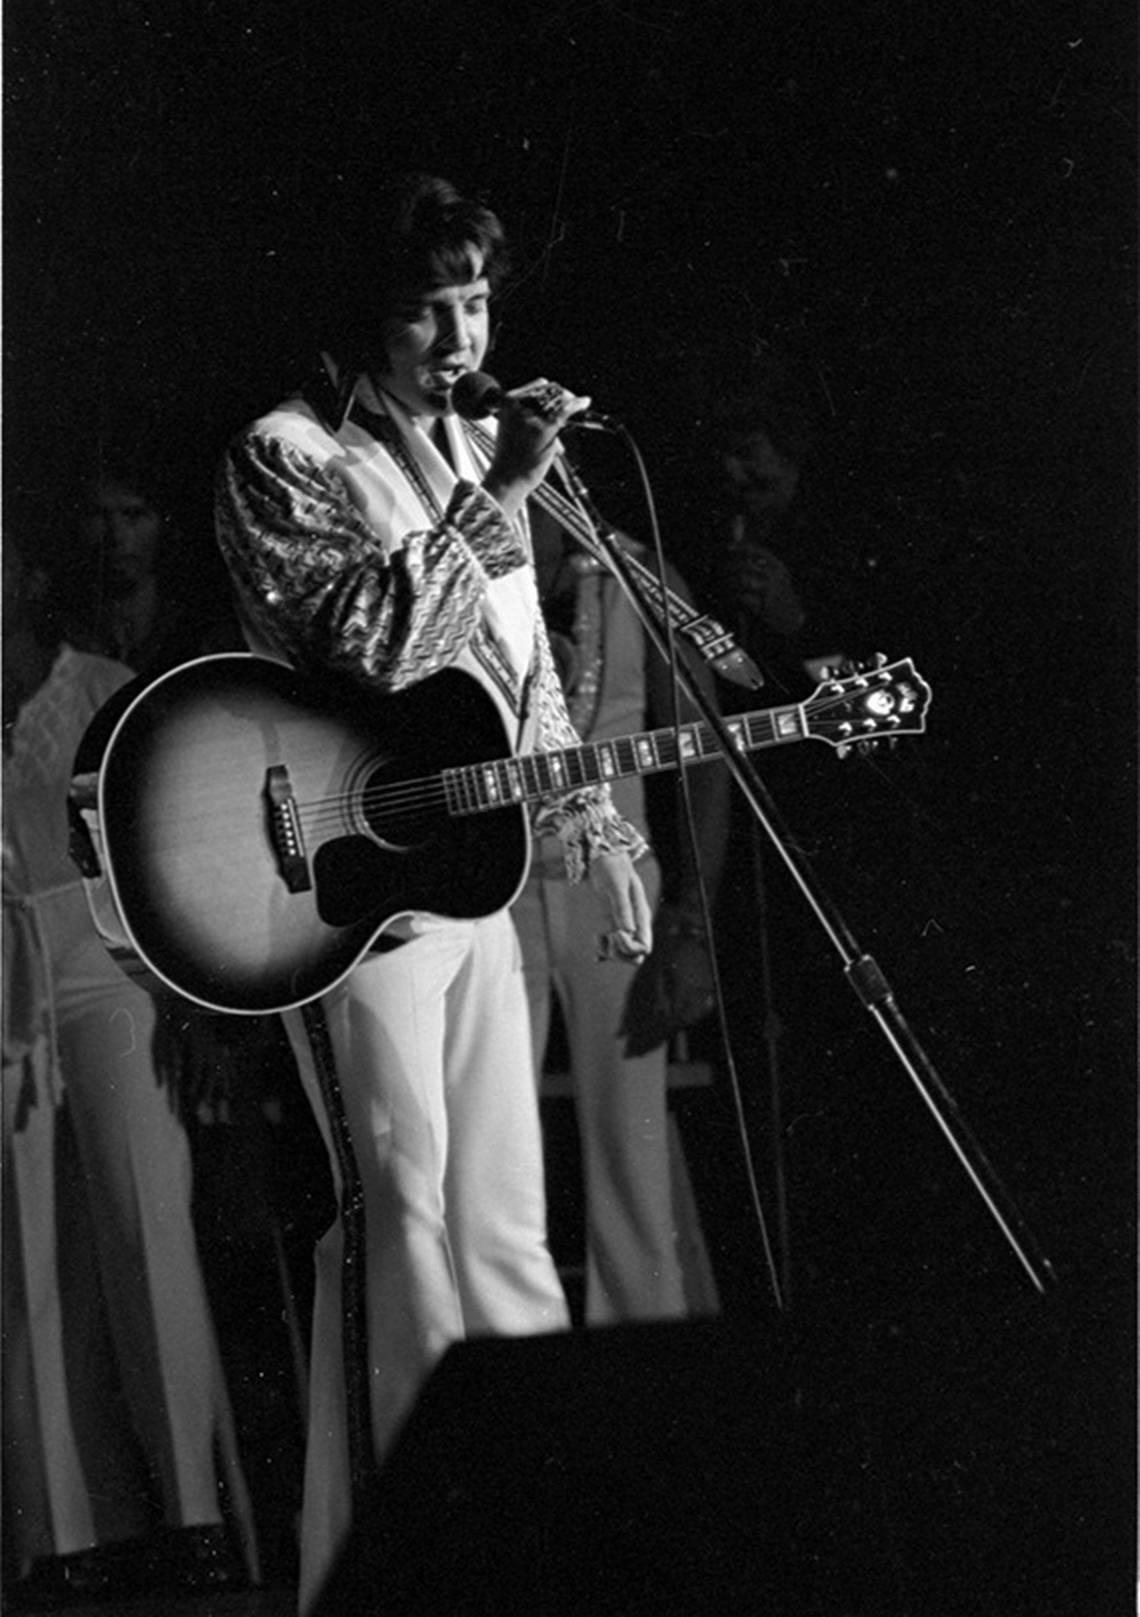 June 4, 1976: Elvis Presley in concert at Fort Worth Convention Center.